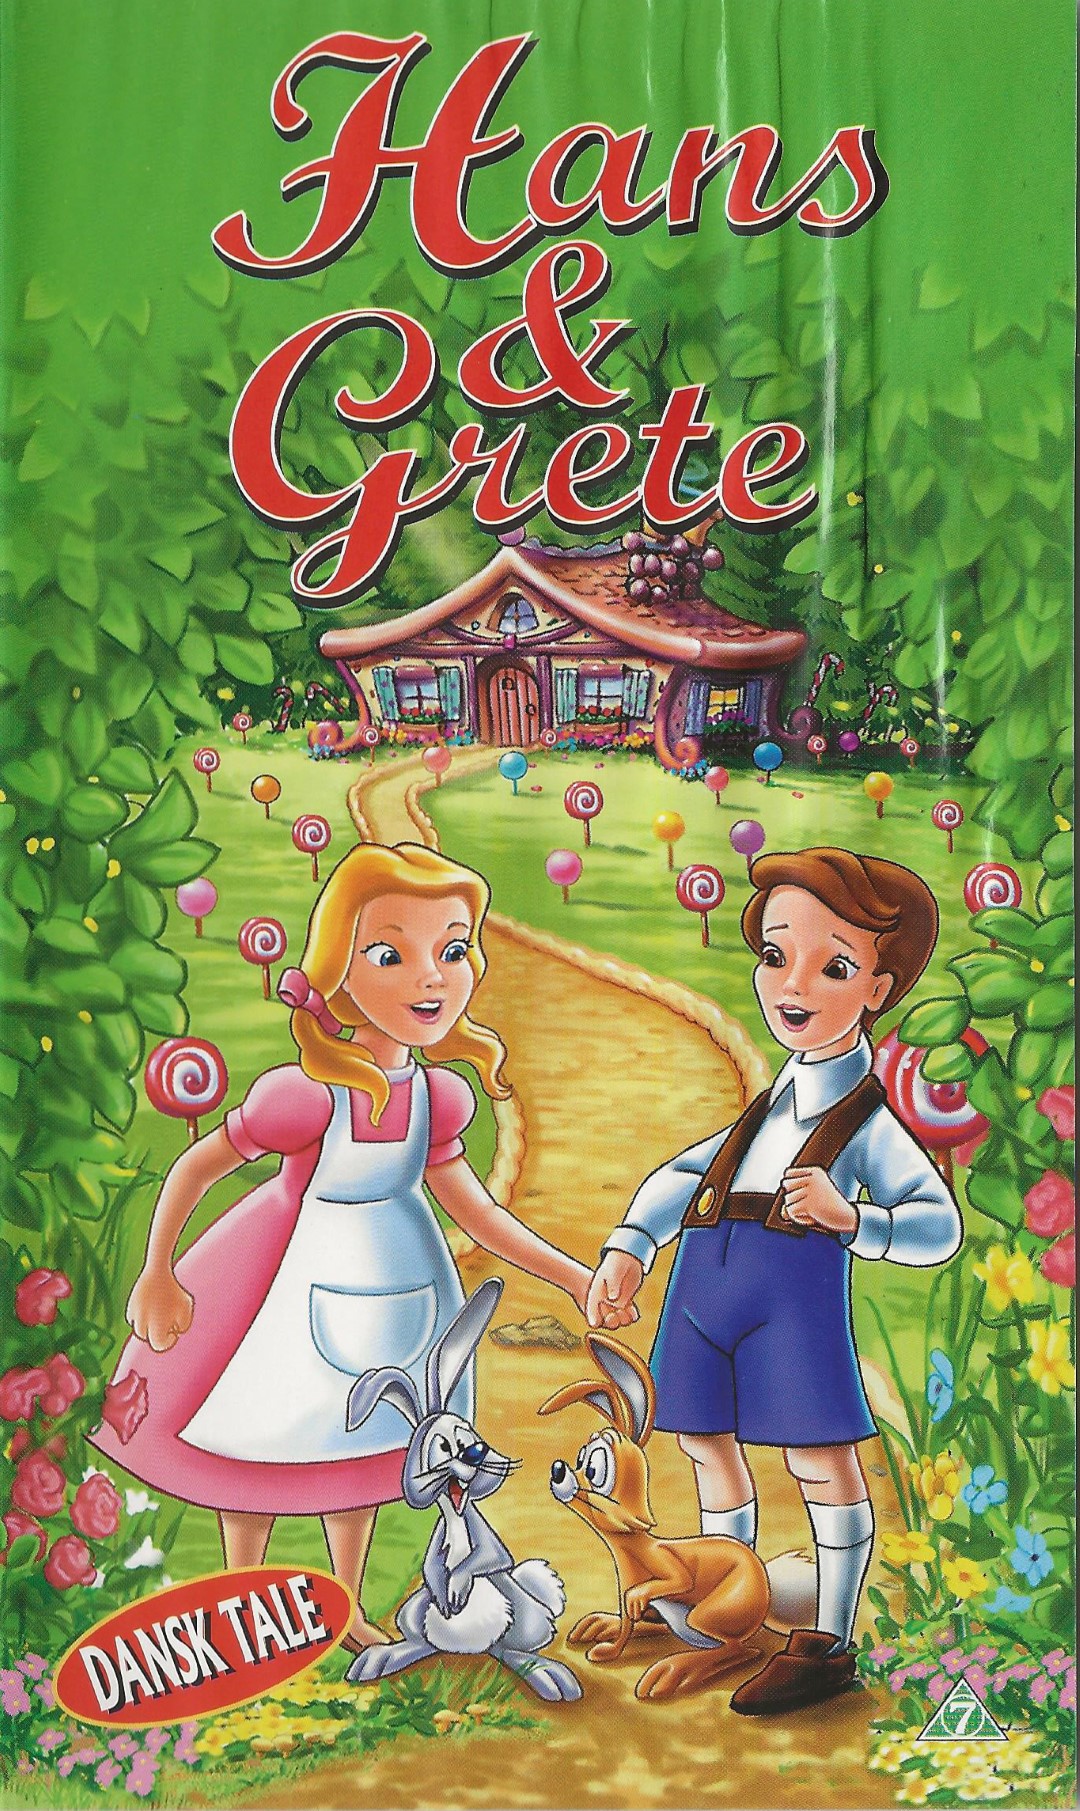 Hans & Grete <p>Org.titel: Hansel & Gretel</p> VHS Salut 1996